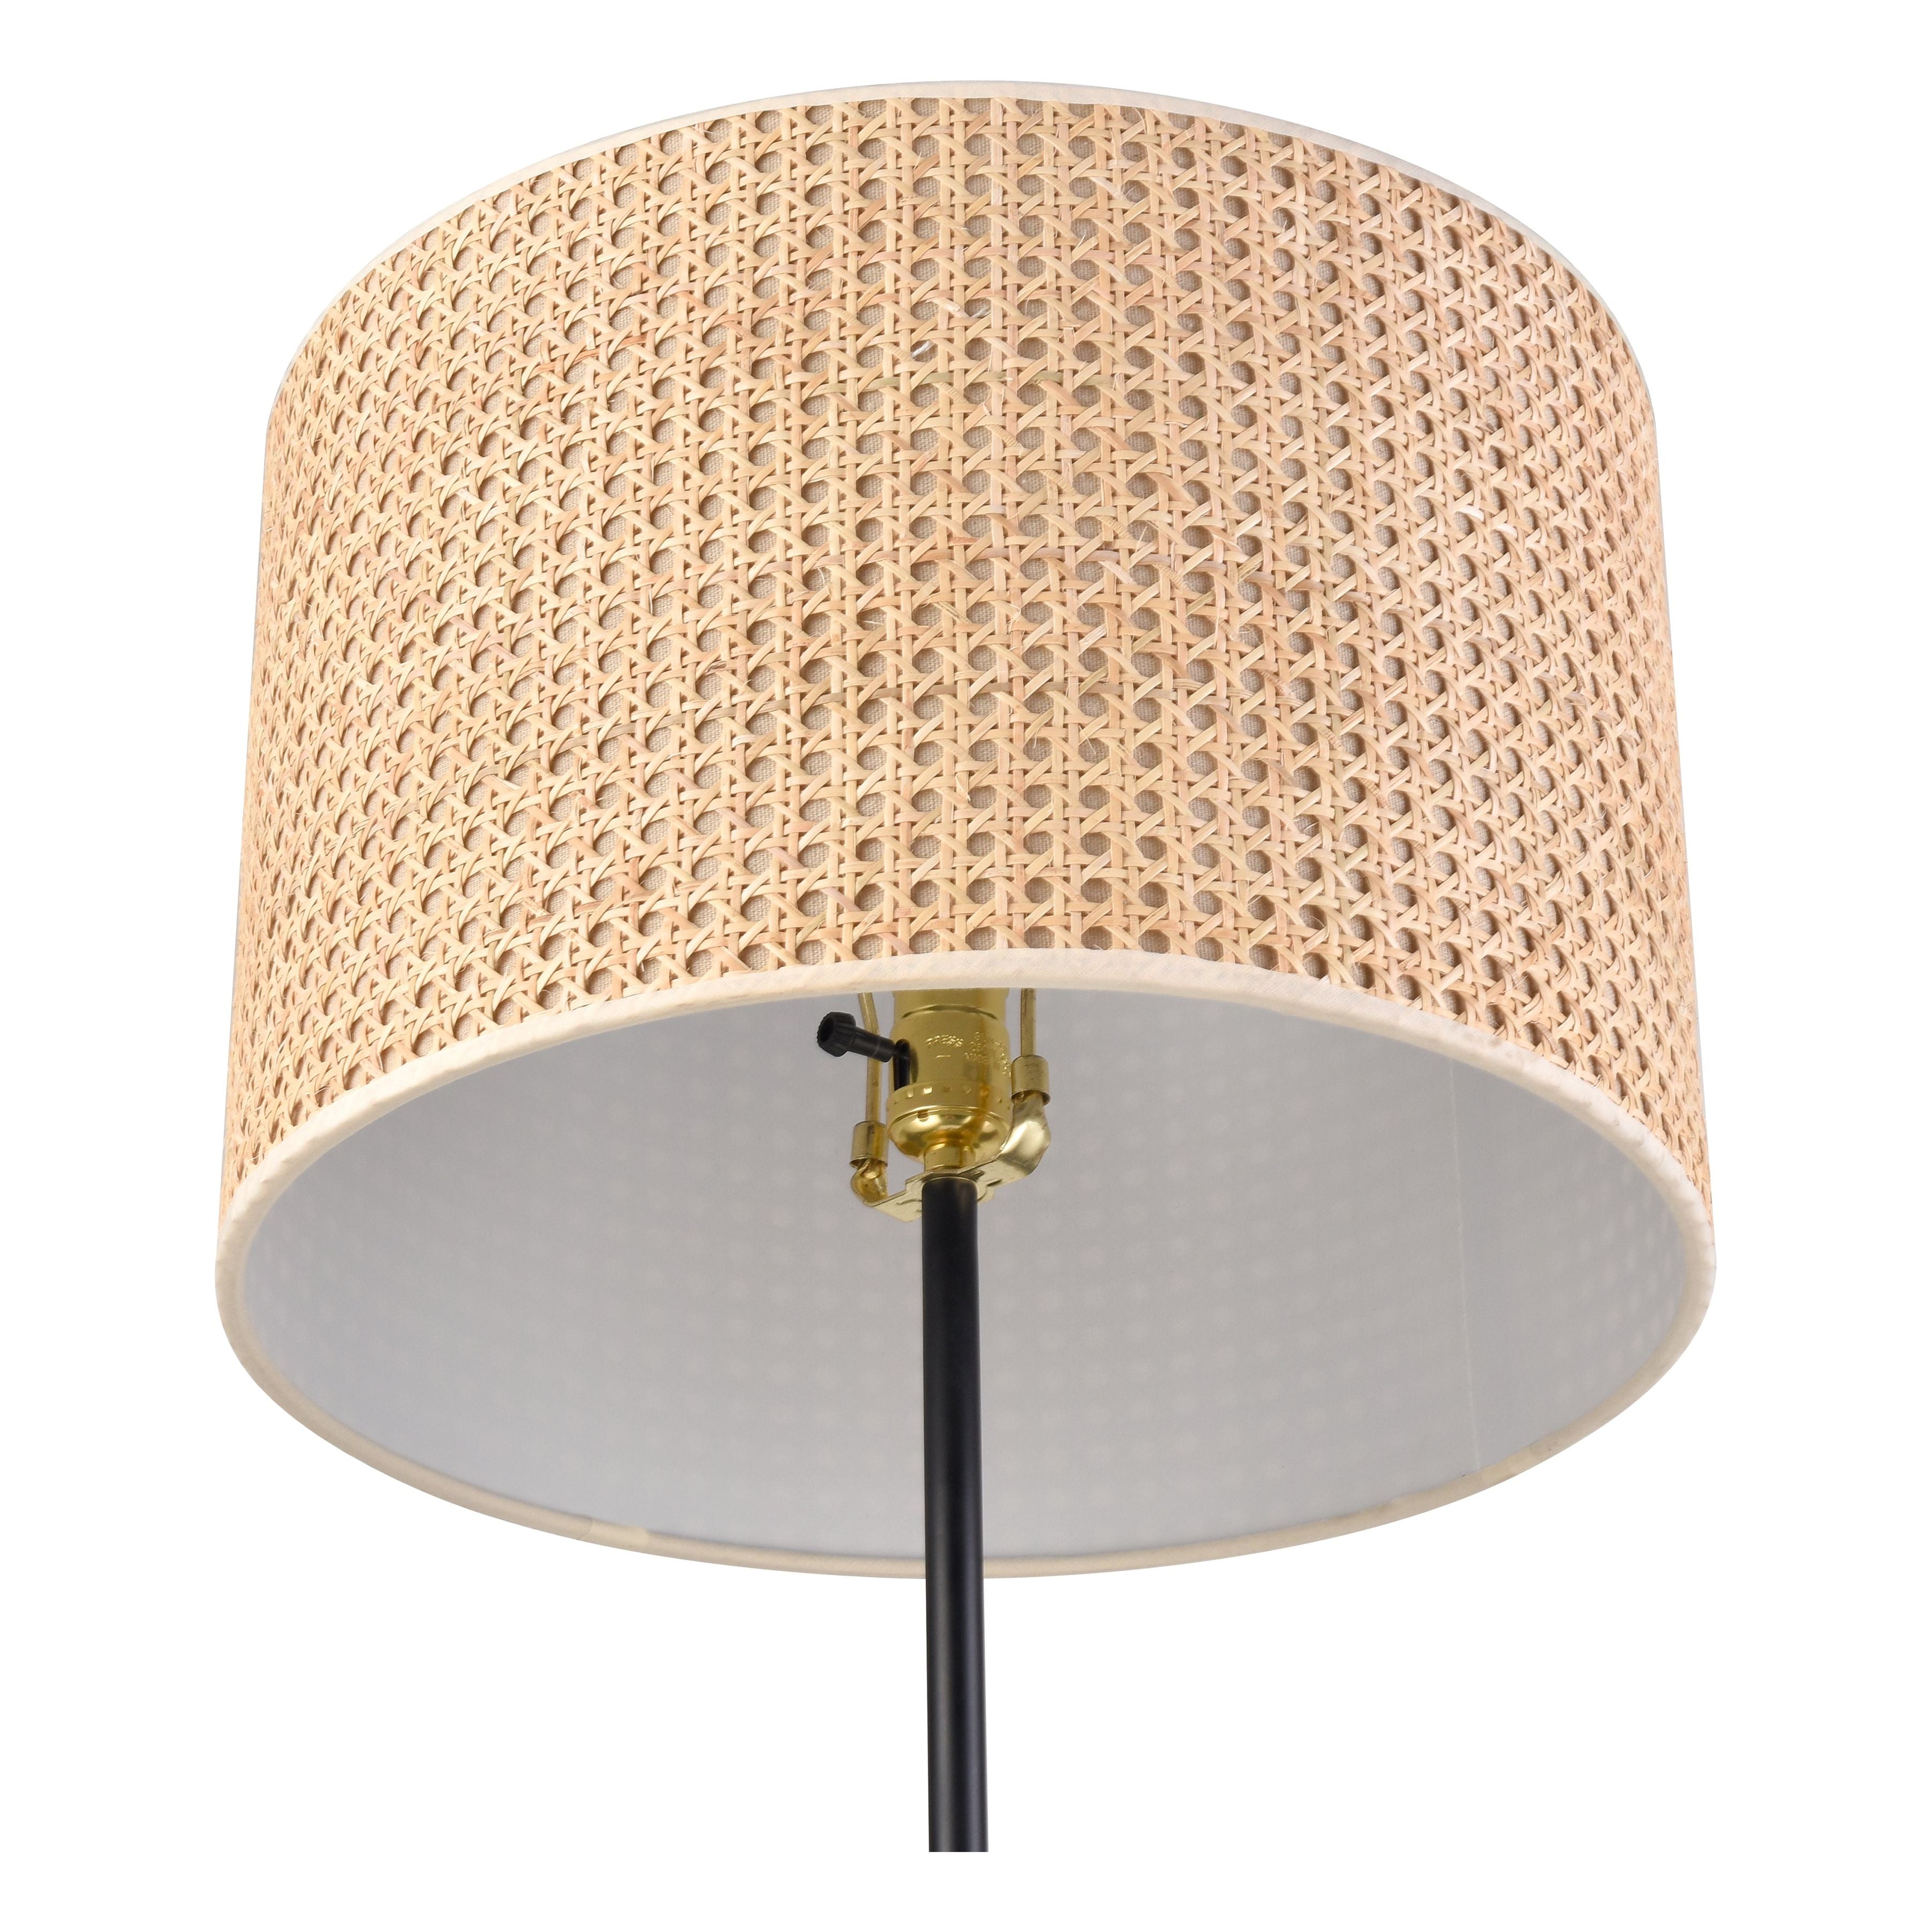 Baitz 62.5" High 1-Light Floor Lamp